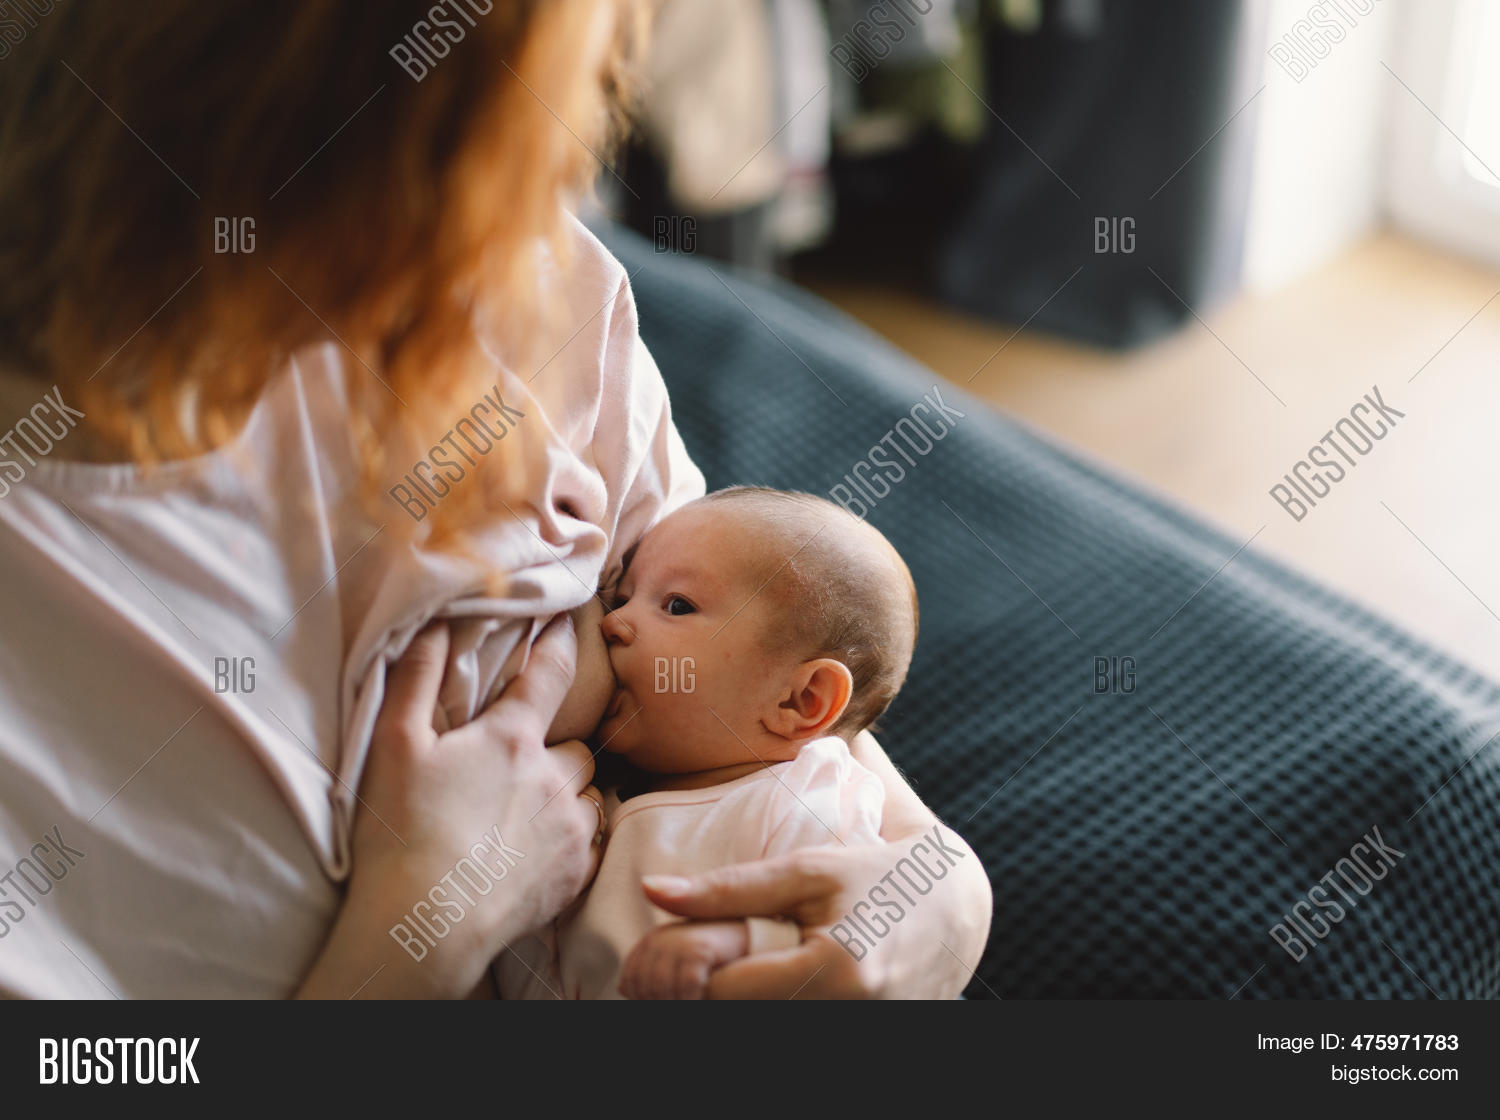 cody savoy share girl sucking breast milk photos